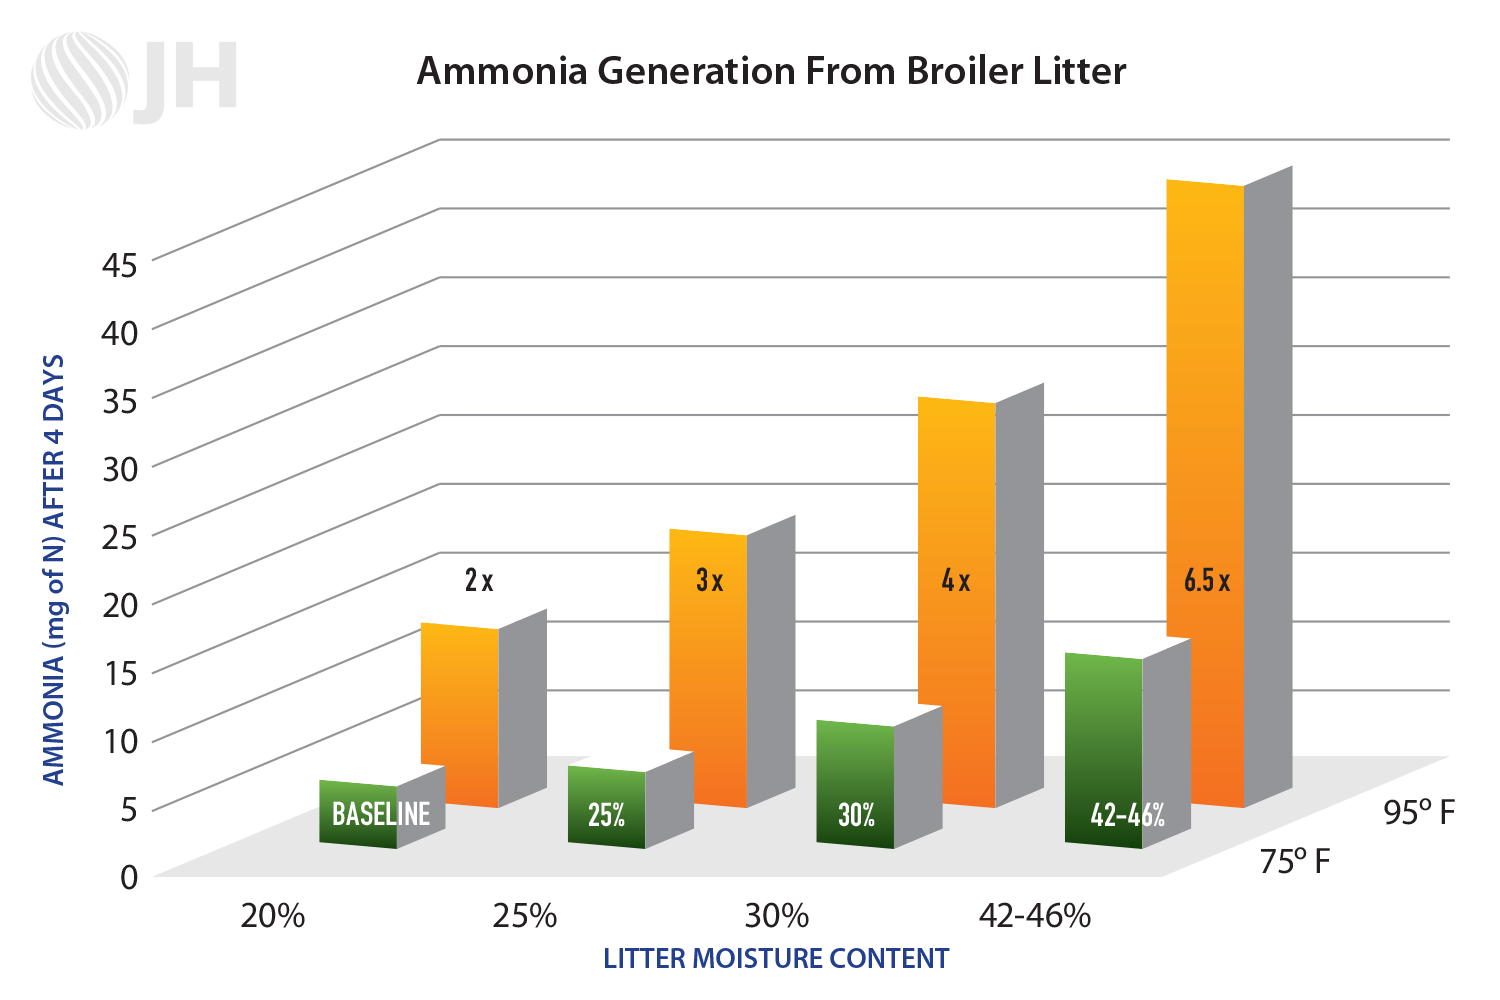 Ammonia Generation From Broiler Litter